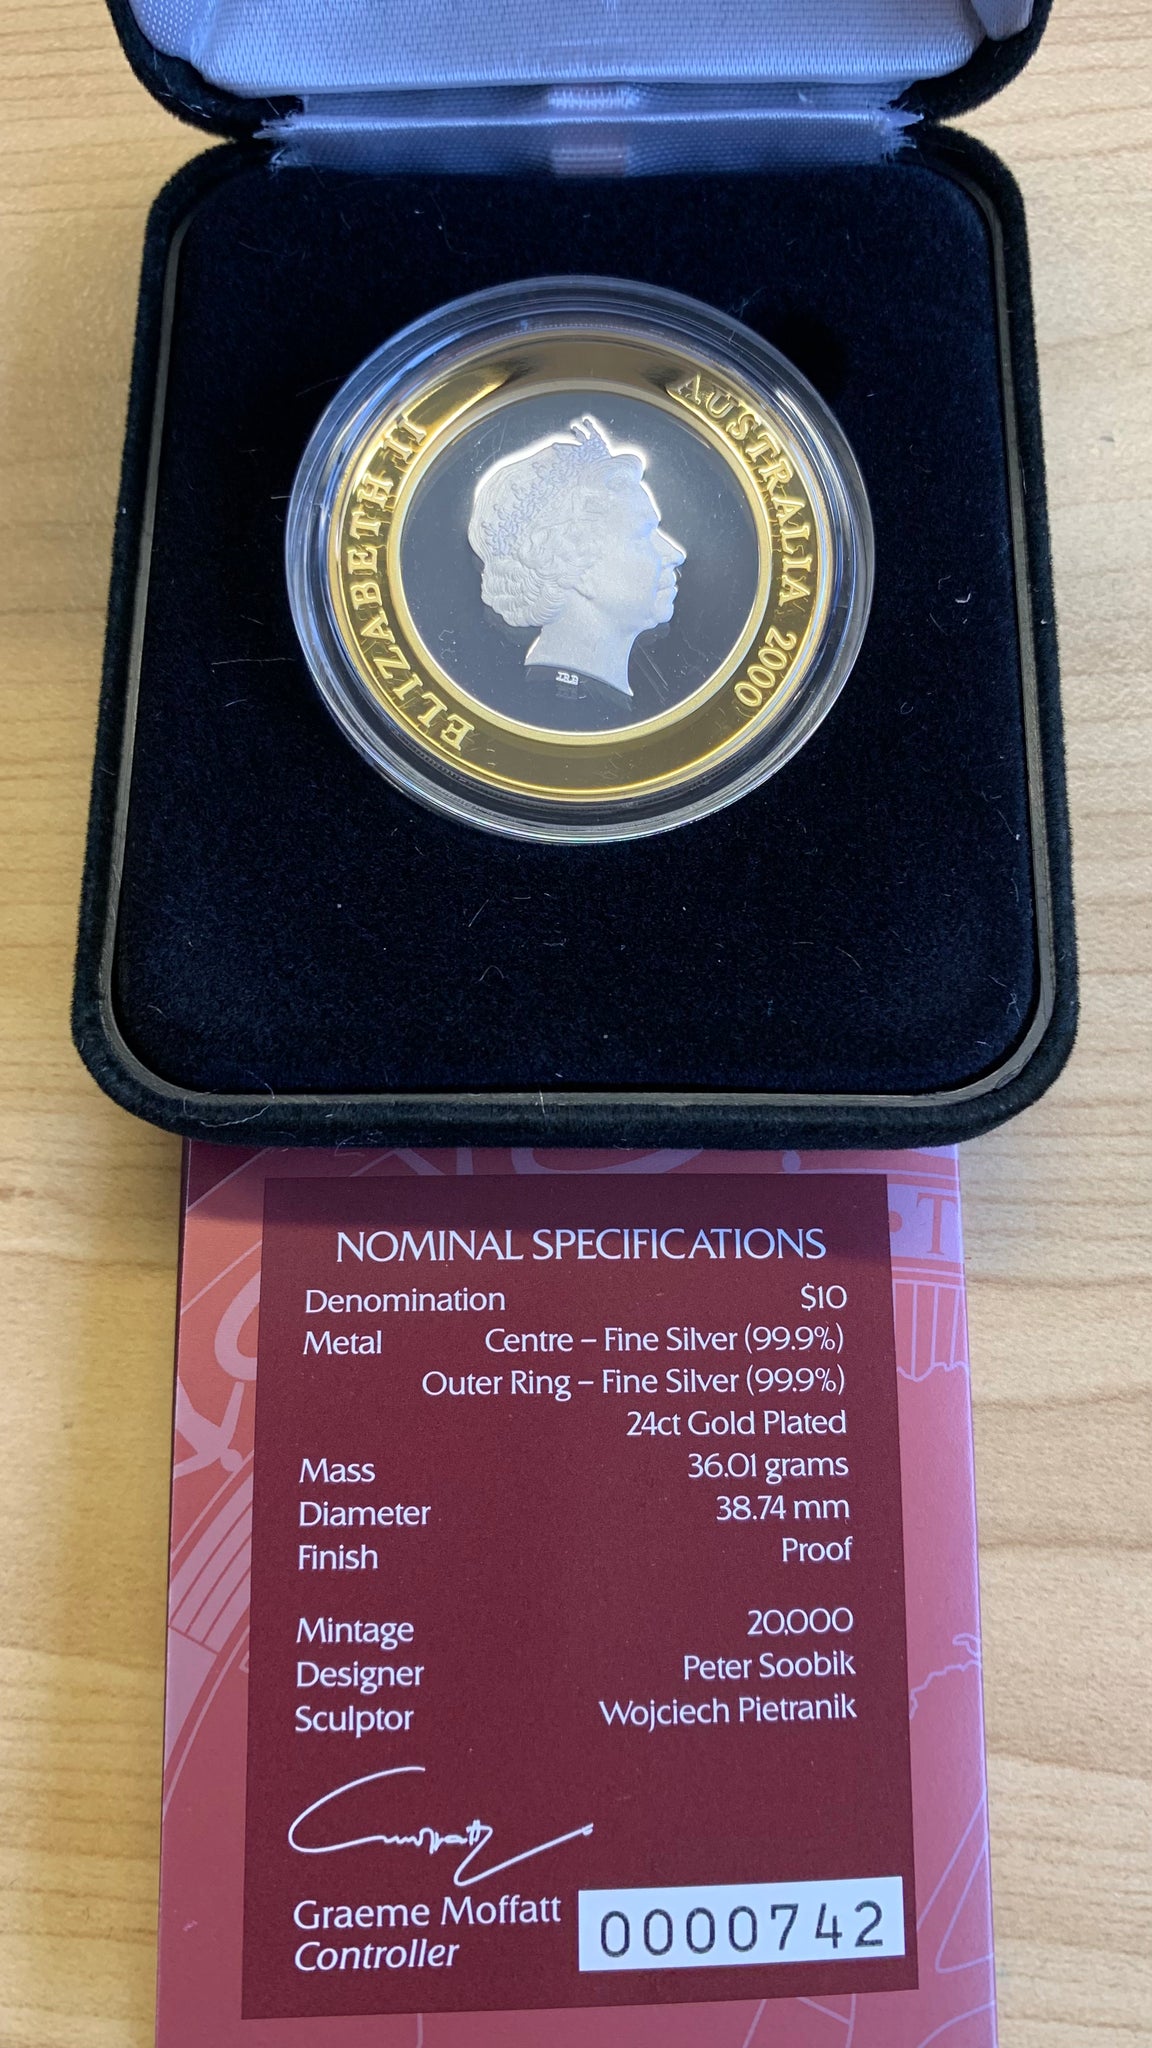 2000 Millennium Present Silver $10 Proof Coin